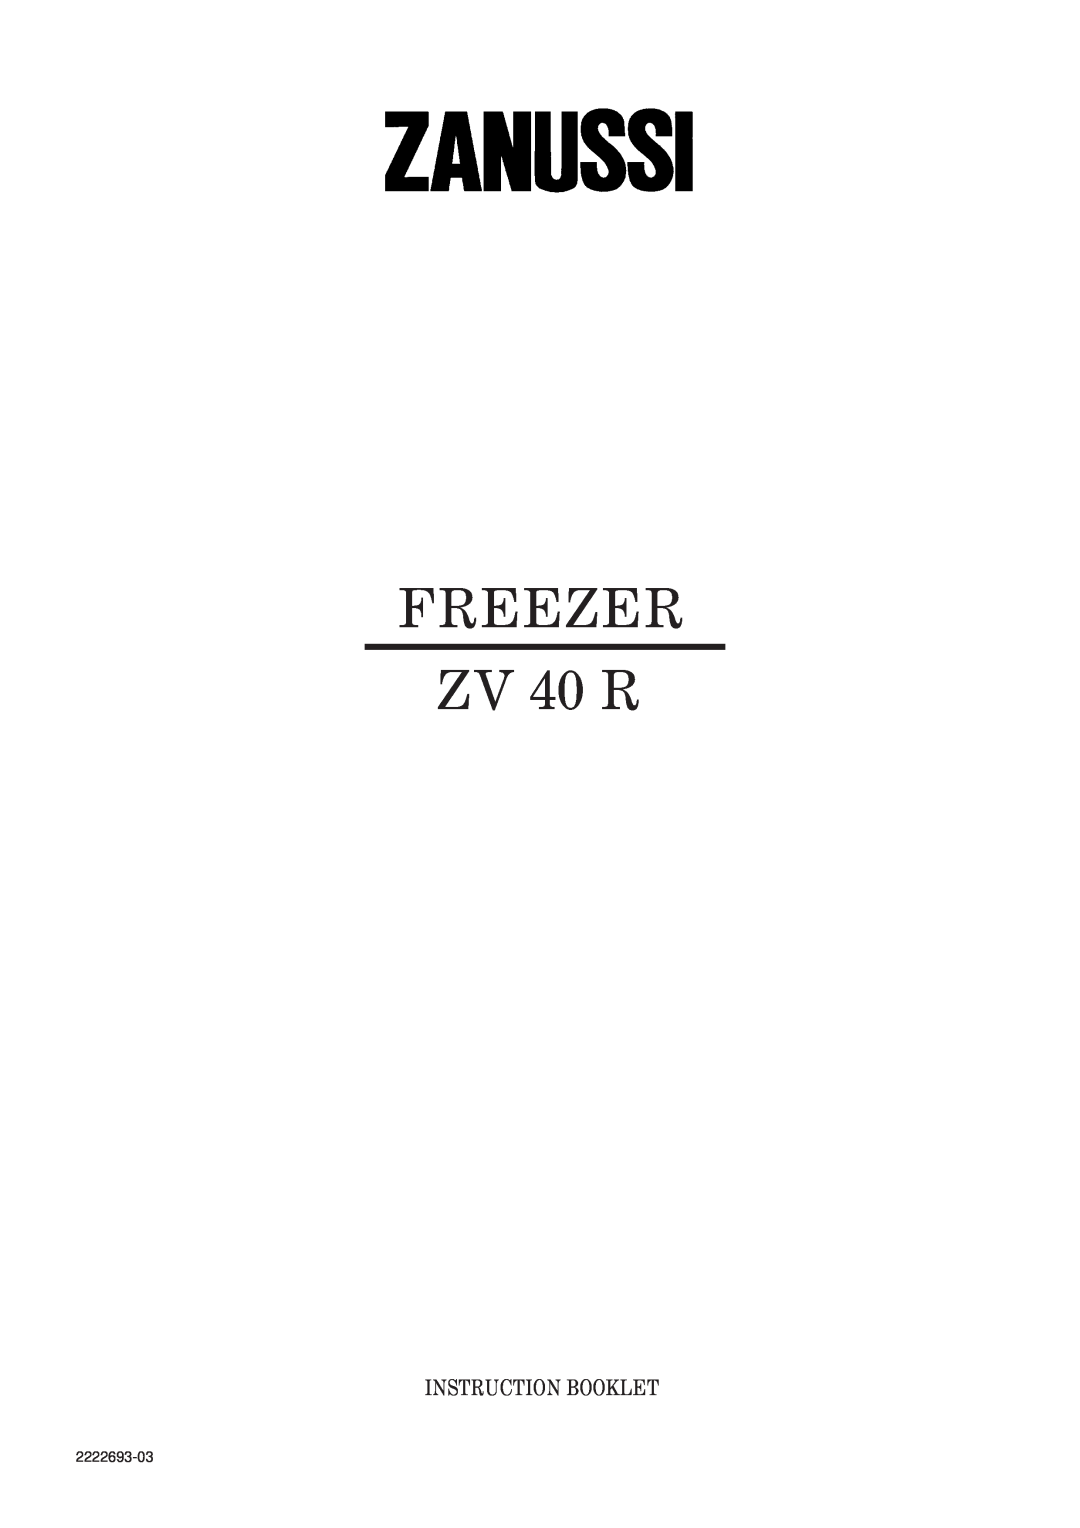 Zanussi manual FREEZER ZV 40 R, Instruction Booklet, 2222693-03 